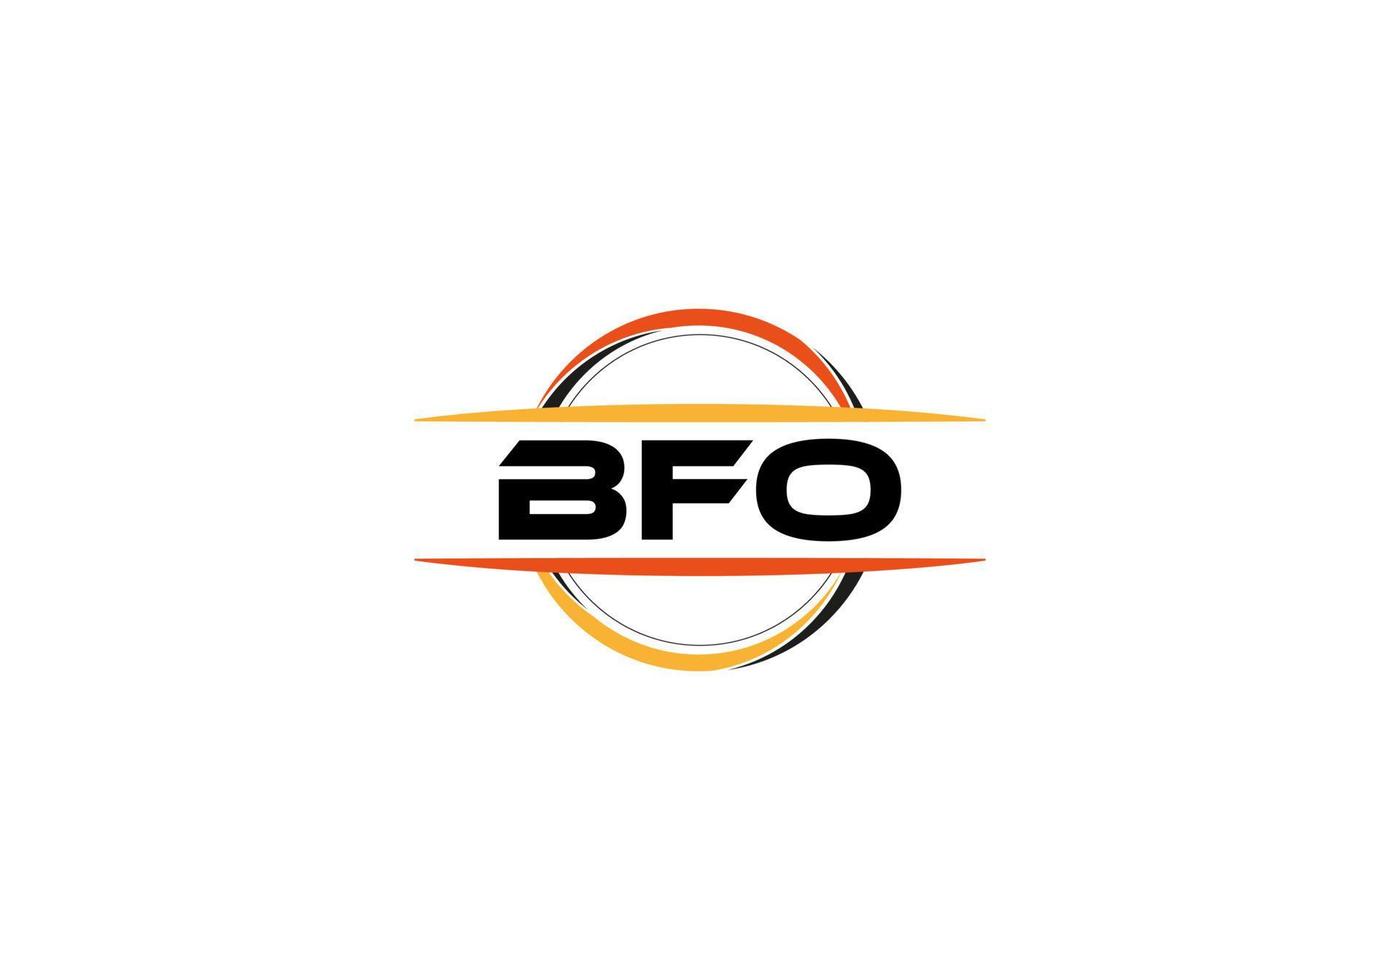 BFO letter royalty ellipse shape logo. BFO brush art logo. BFO logo for a company, business, and commercial use. vector